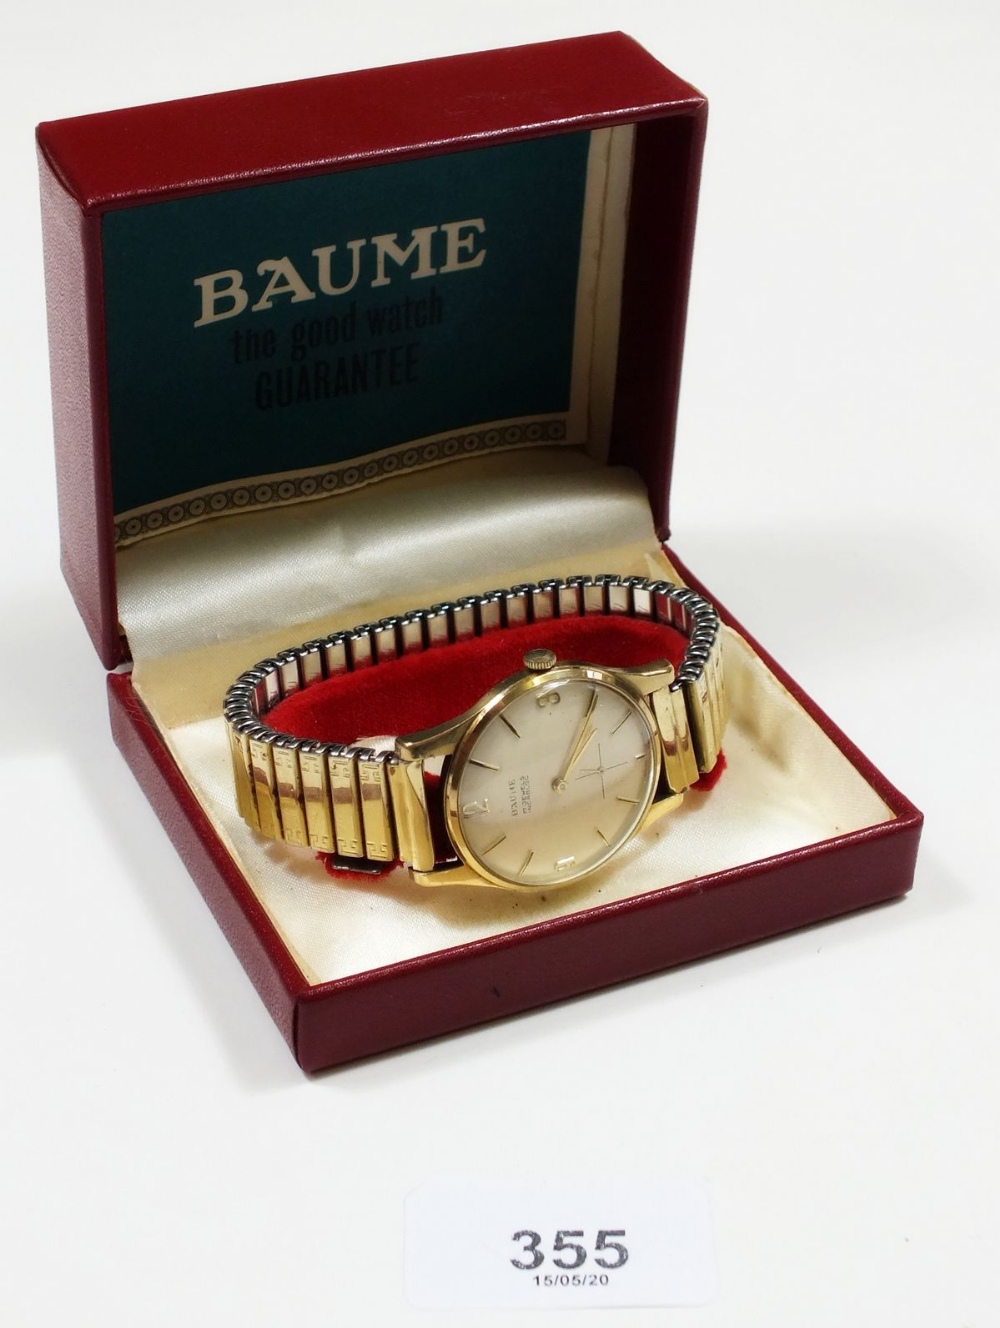 A Baume gold gentleman's wrist watch - boxed